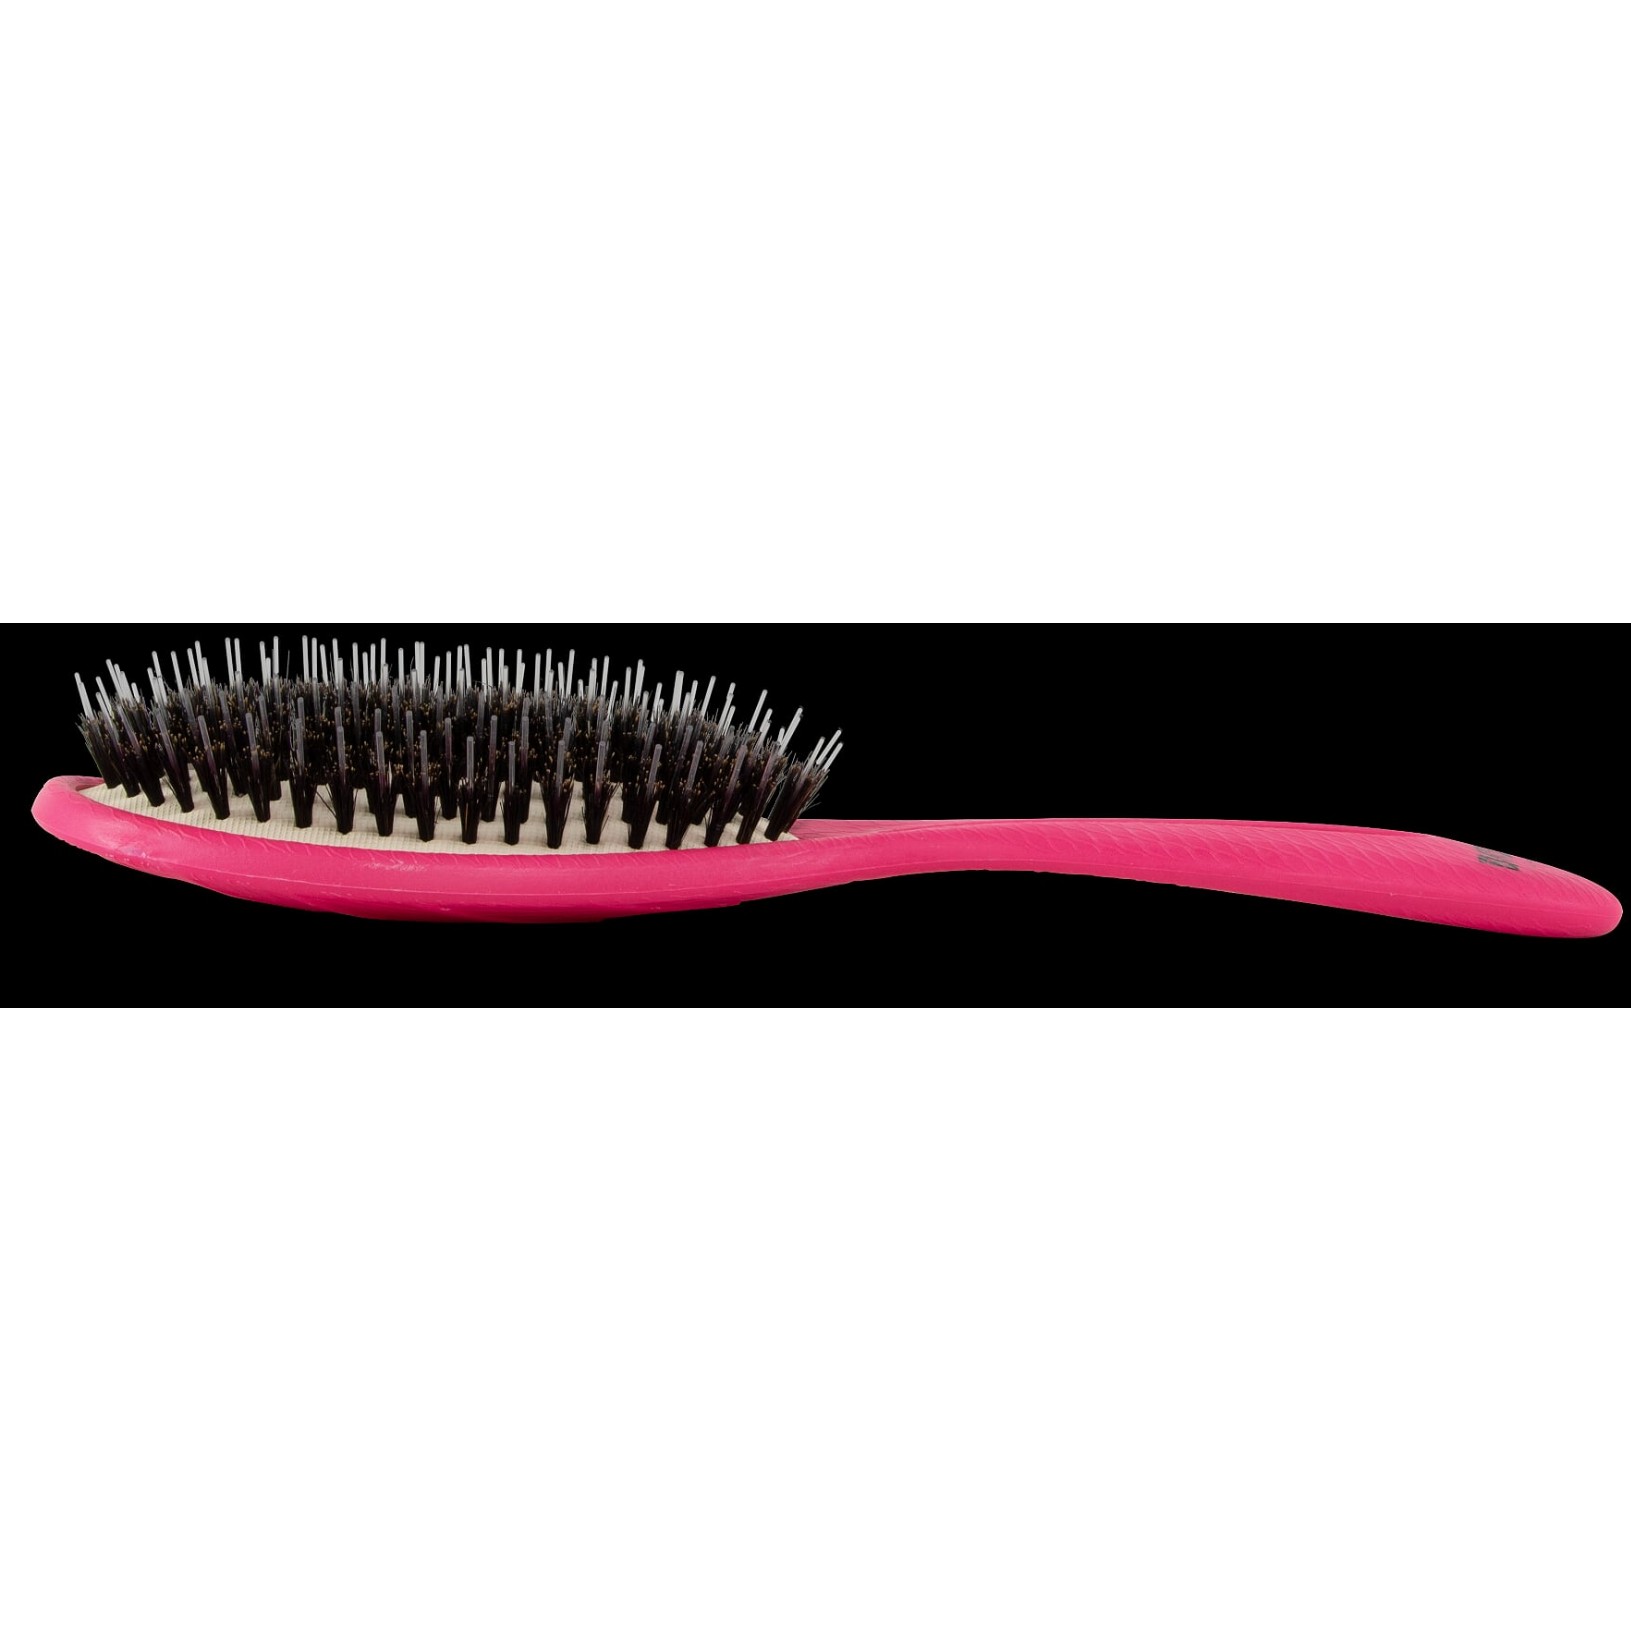 Bass Brushes- The BIO-FLEX Shine Shine & Condition Hair Brush Oval Shape